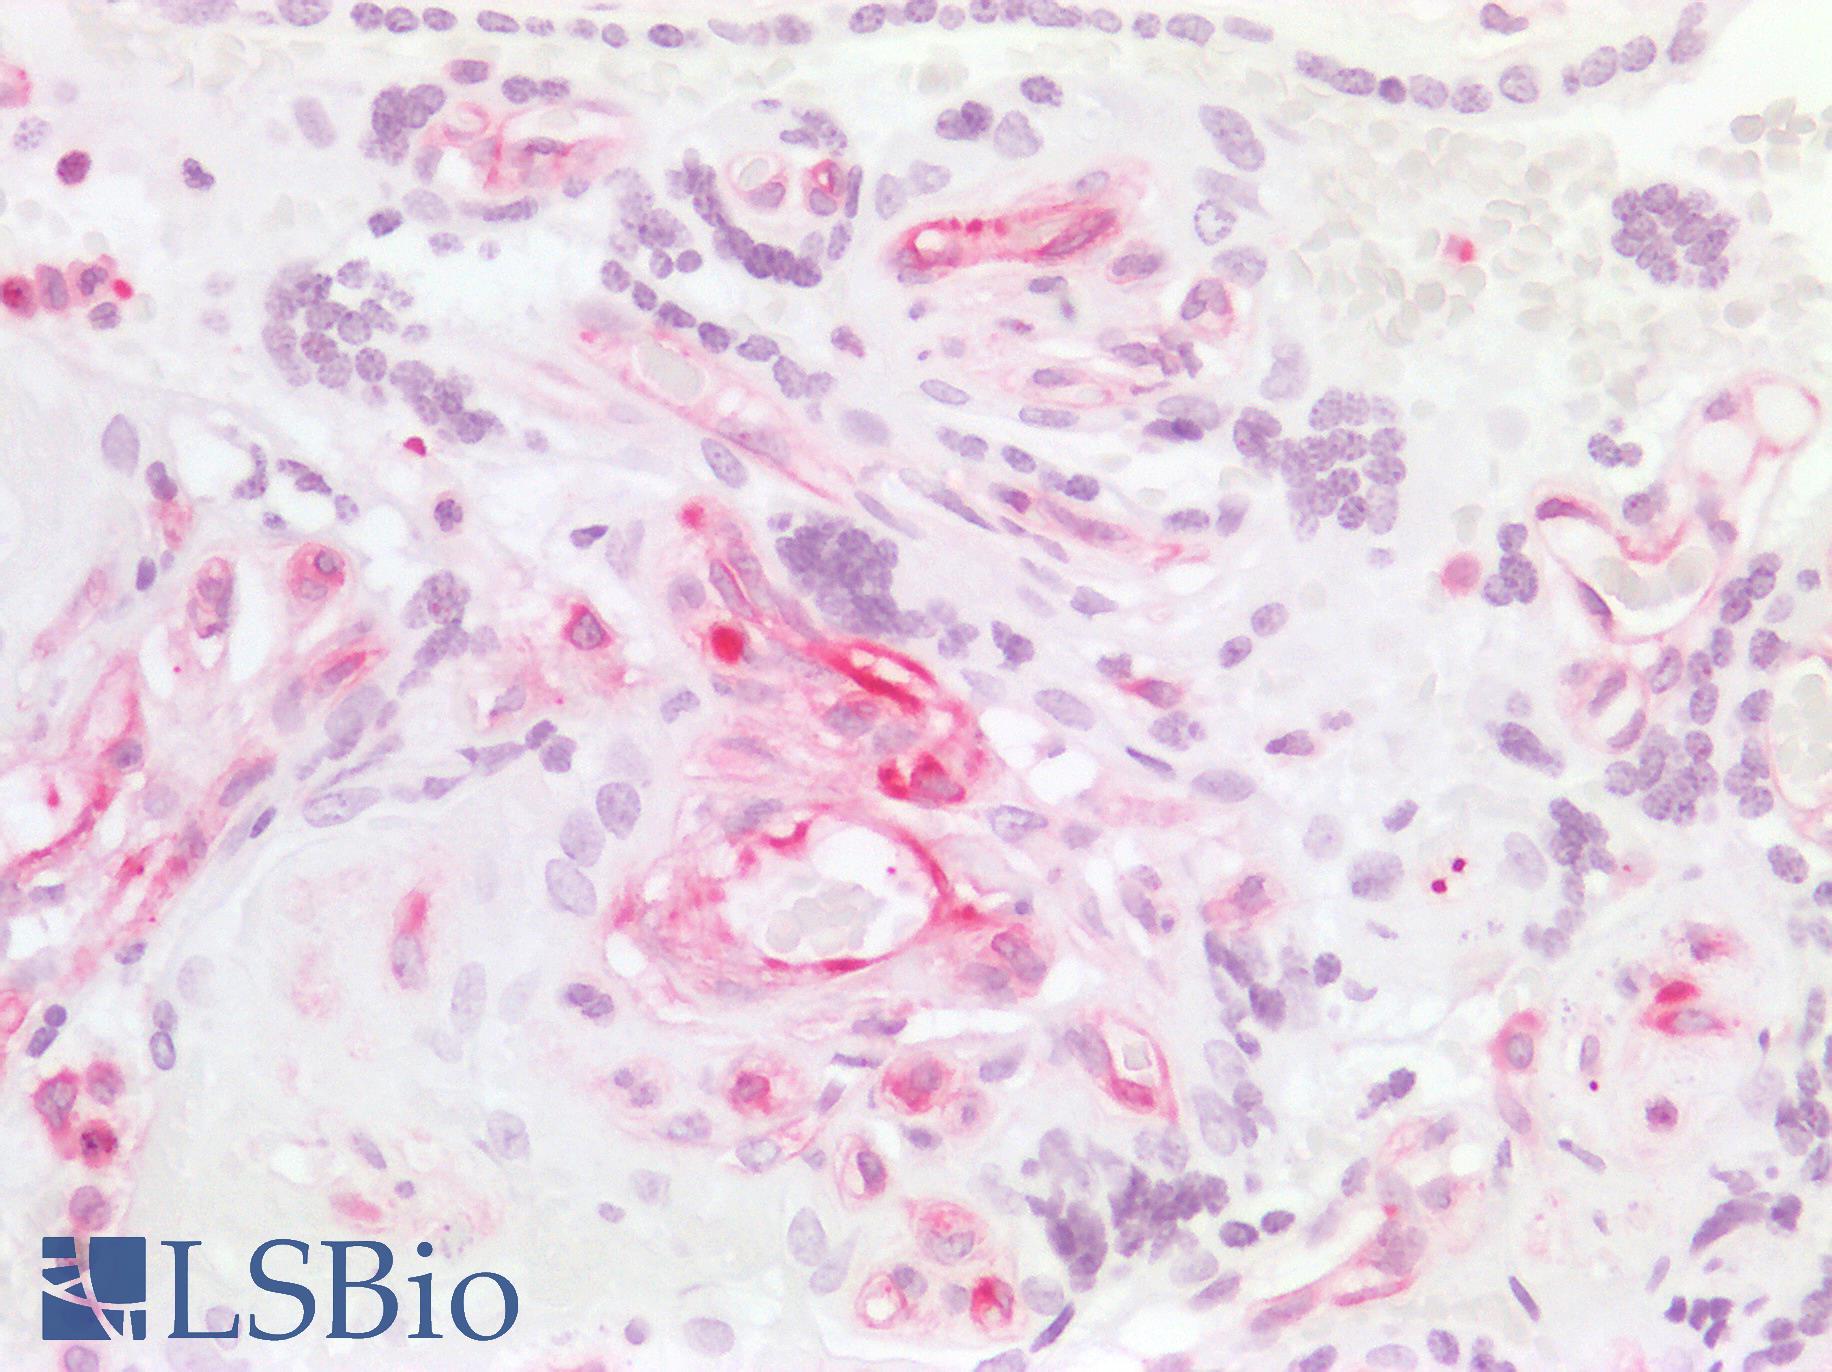 MSN / Moesin Antibody - Human Placenta: Formalin-Fixed, Paraffin-Embedded (FFPE)